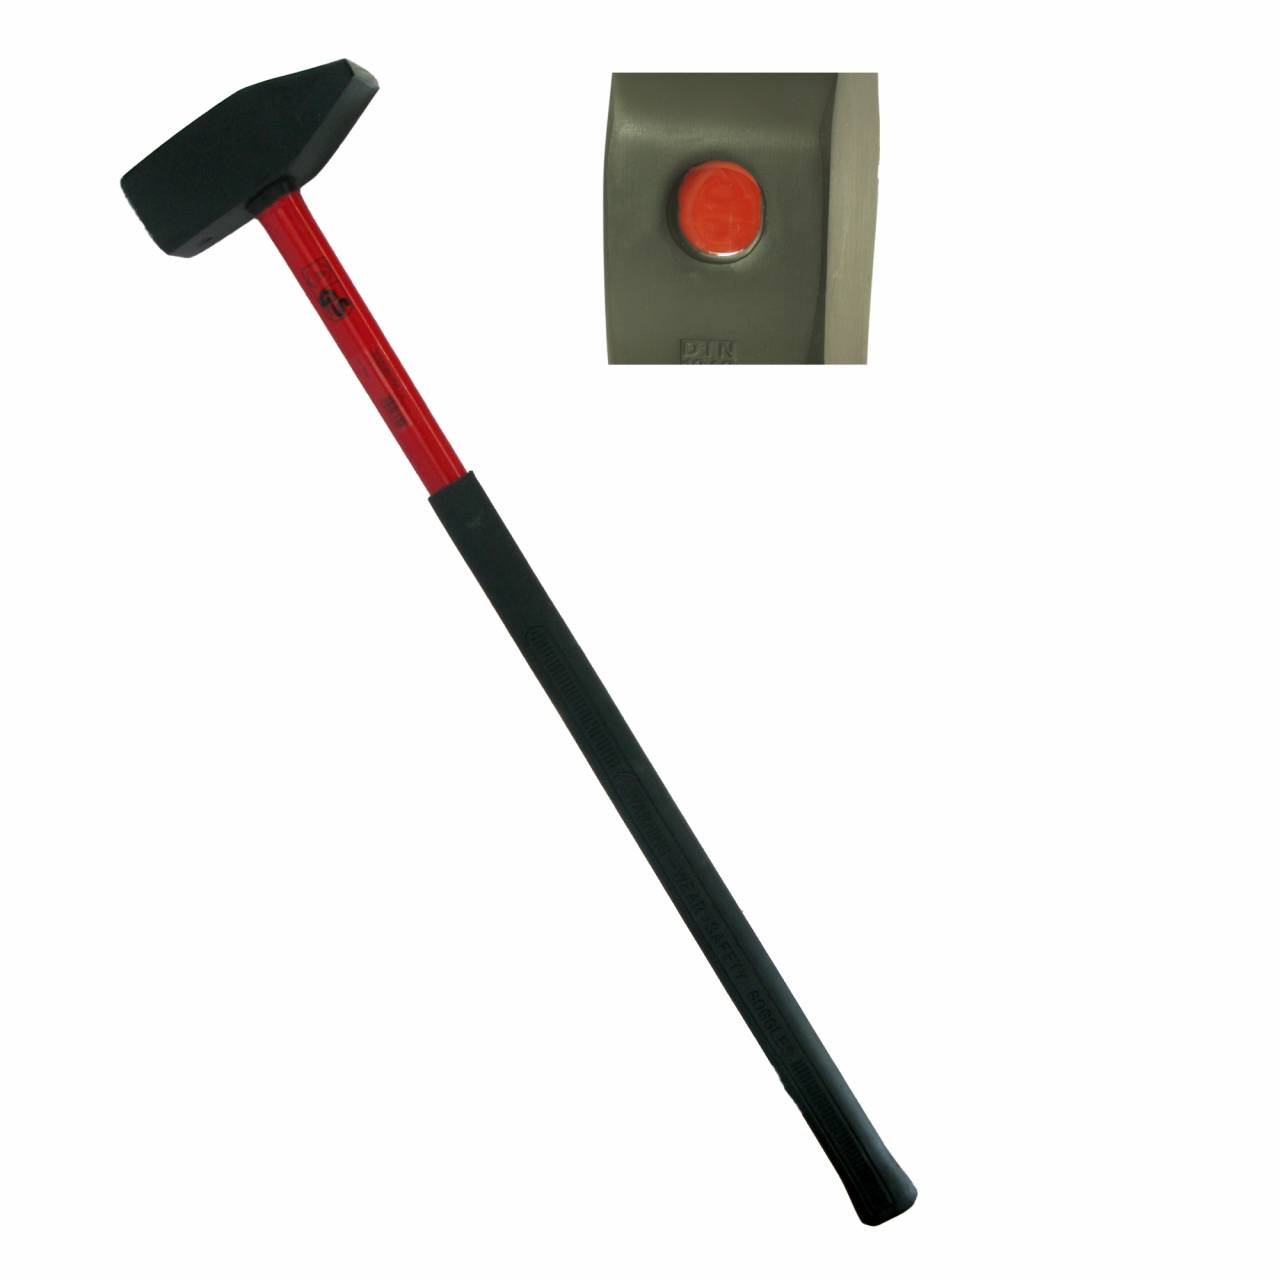 Vorschlaghammer 3,0 kg, Fiberglasstiel